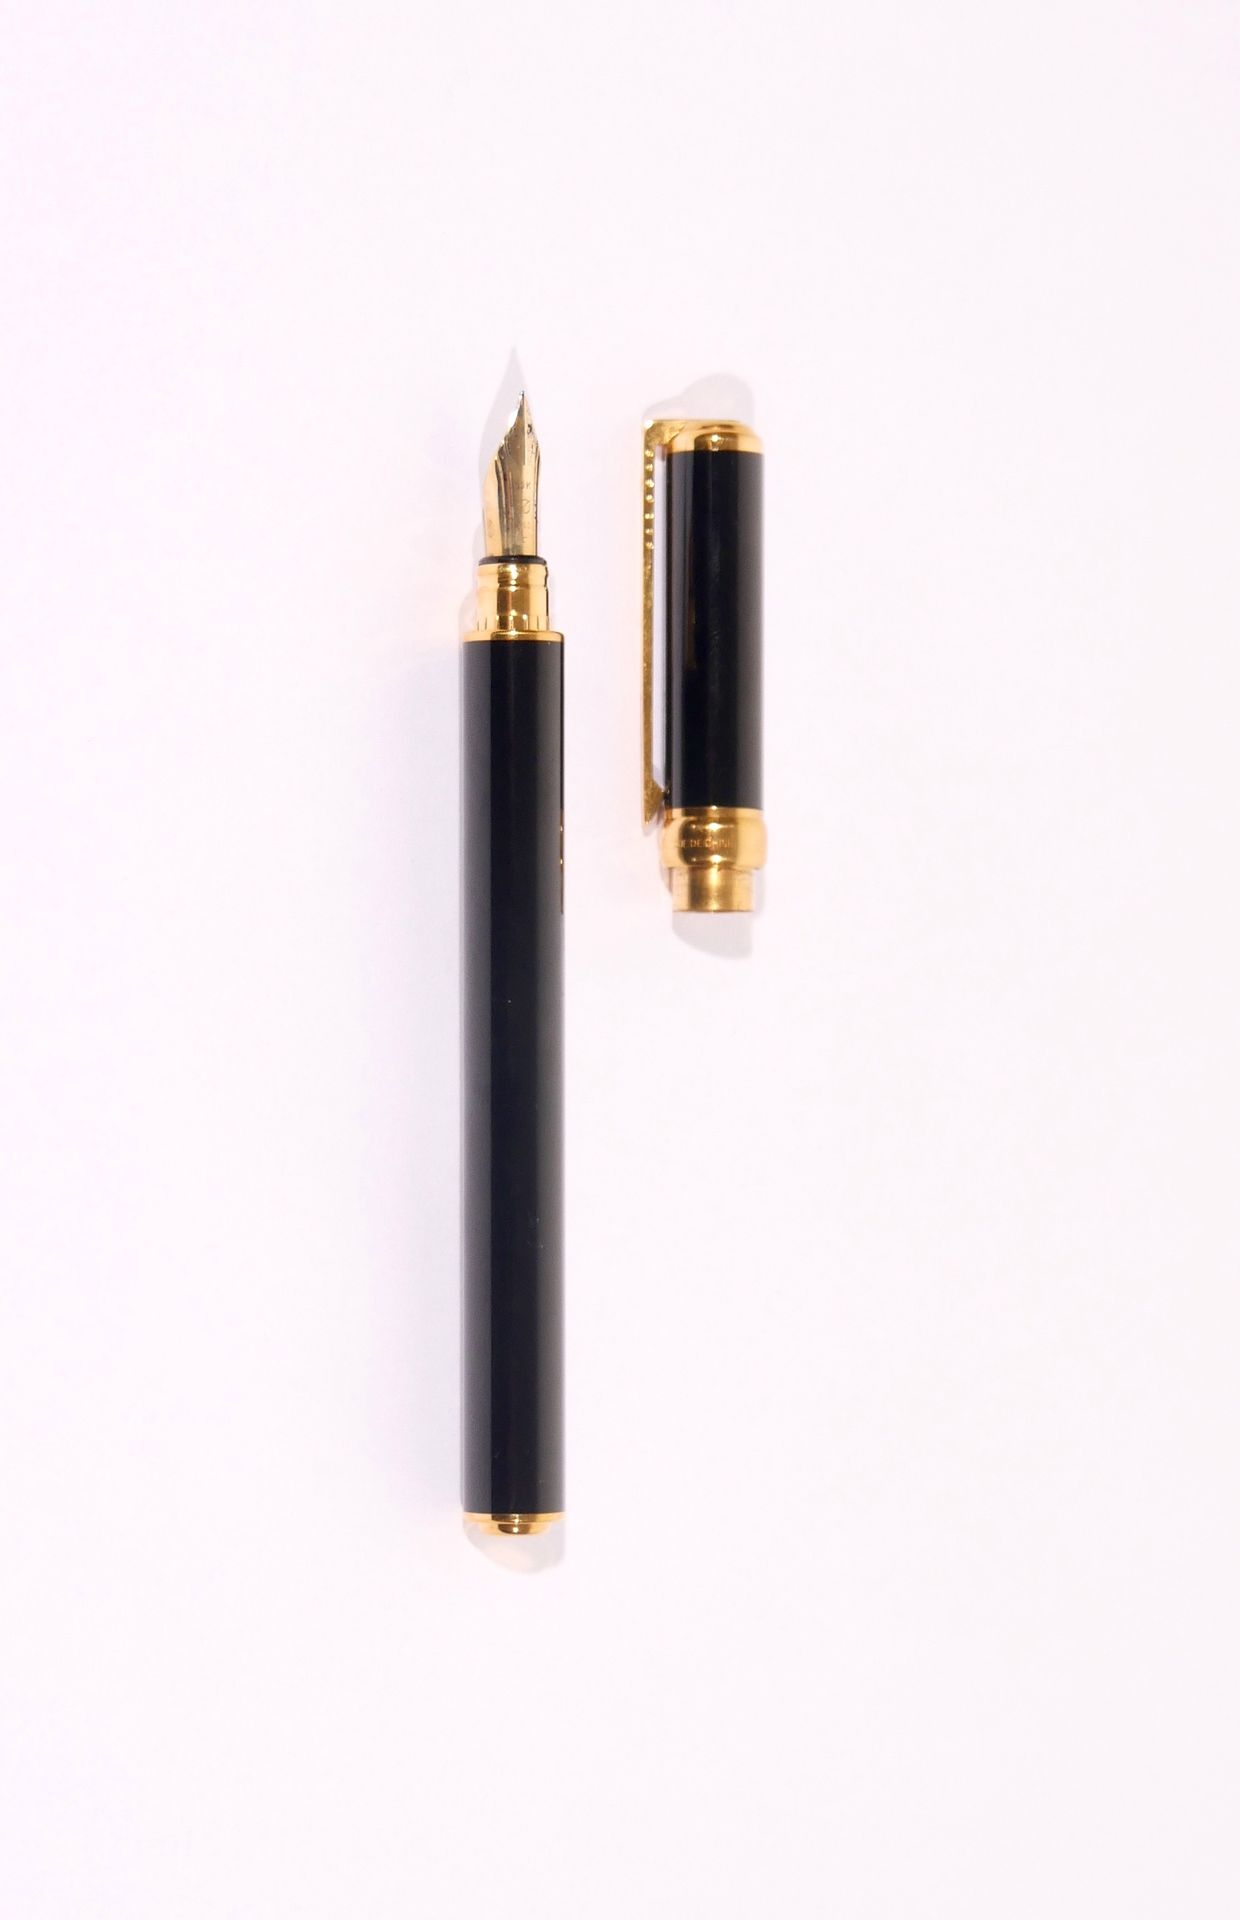 Null S.T.DUPONT

盖茨比

钢笔，镀金金属和黑色漆面，笔尖为金色750/1000e细。

刻有S.T.的戒指。巴黎杜邦中国大漆

夹子编号为54&hellip;